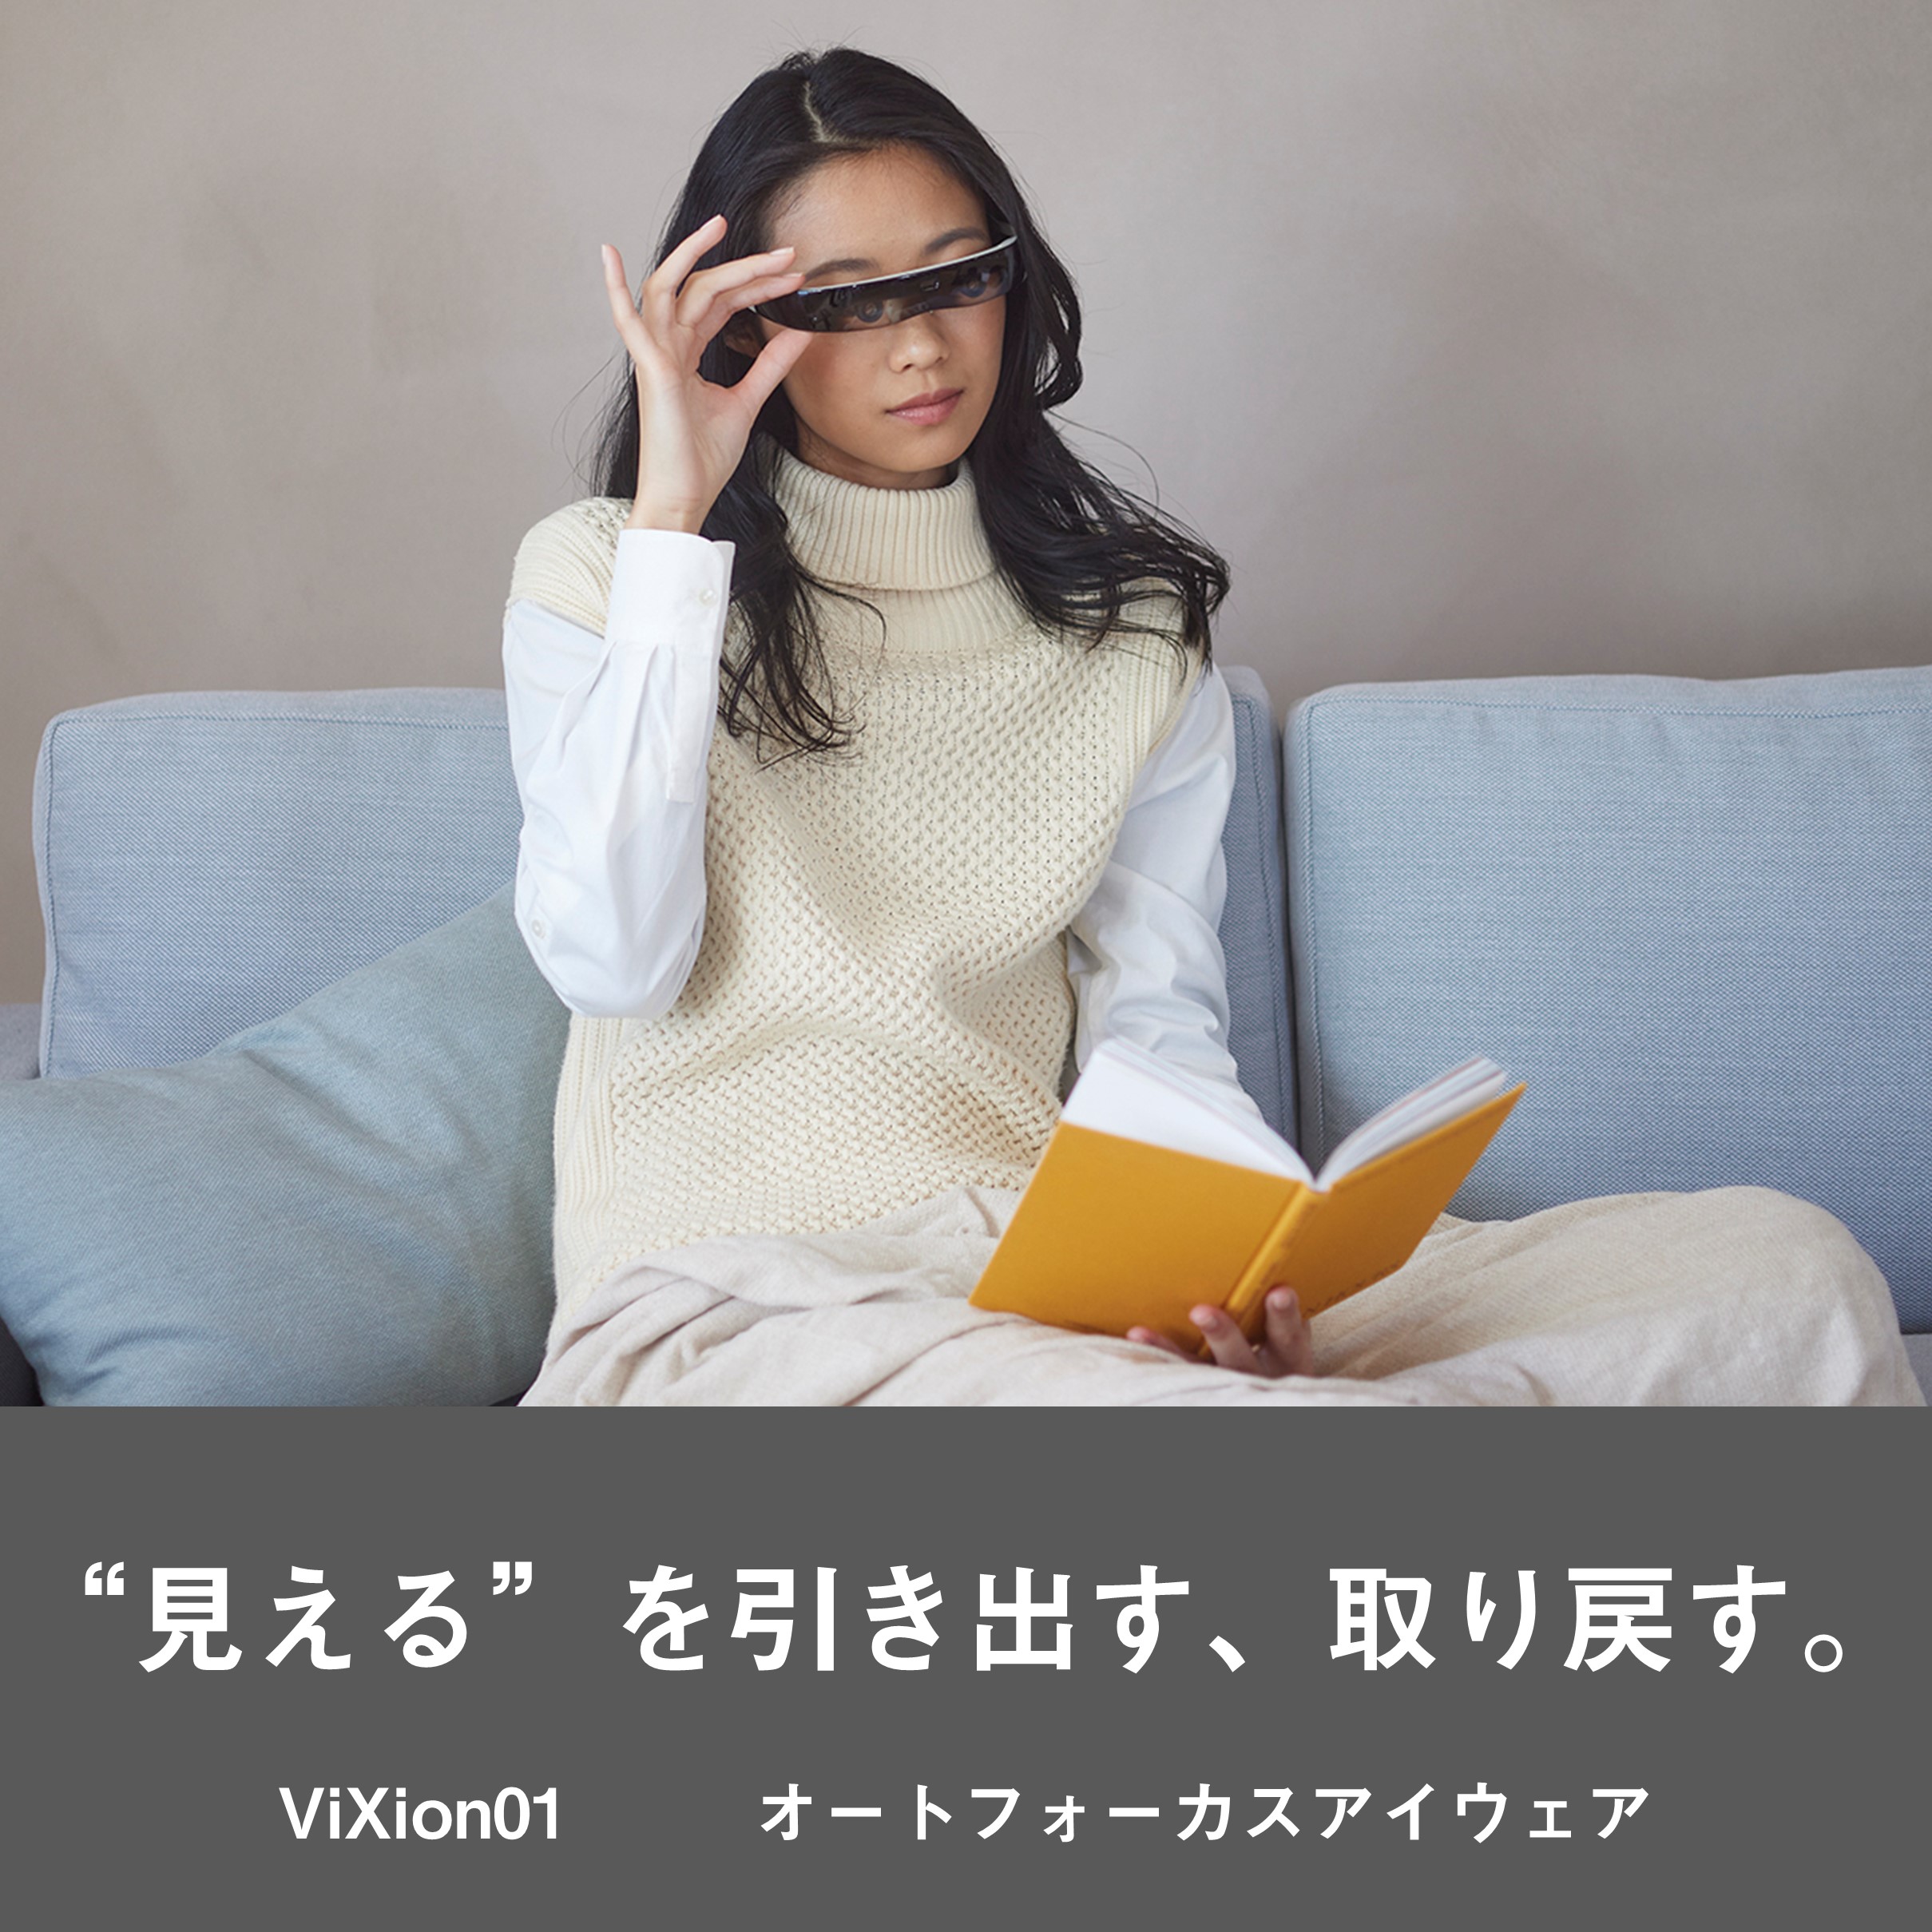 ViXion01 / オートフォーカスアイウェア